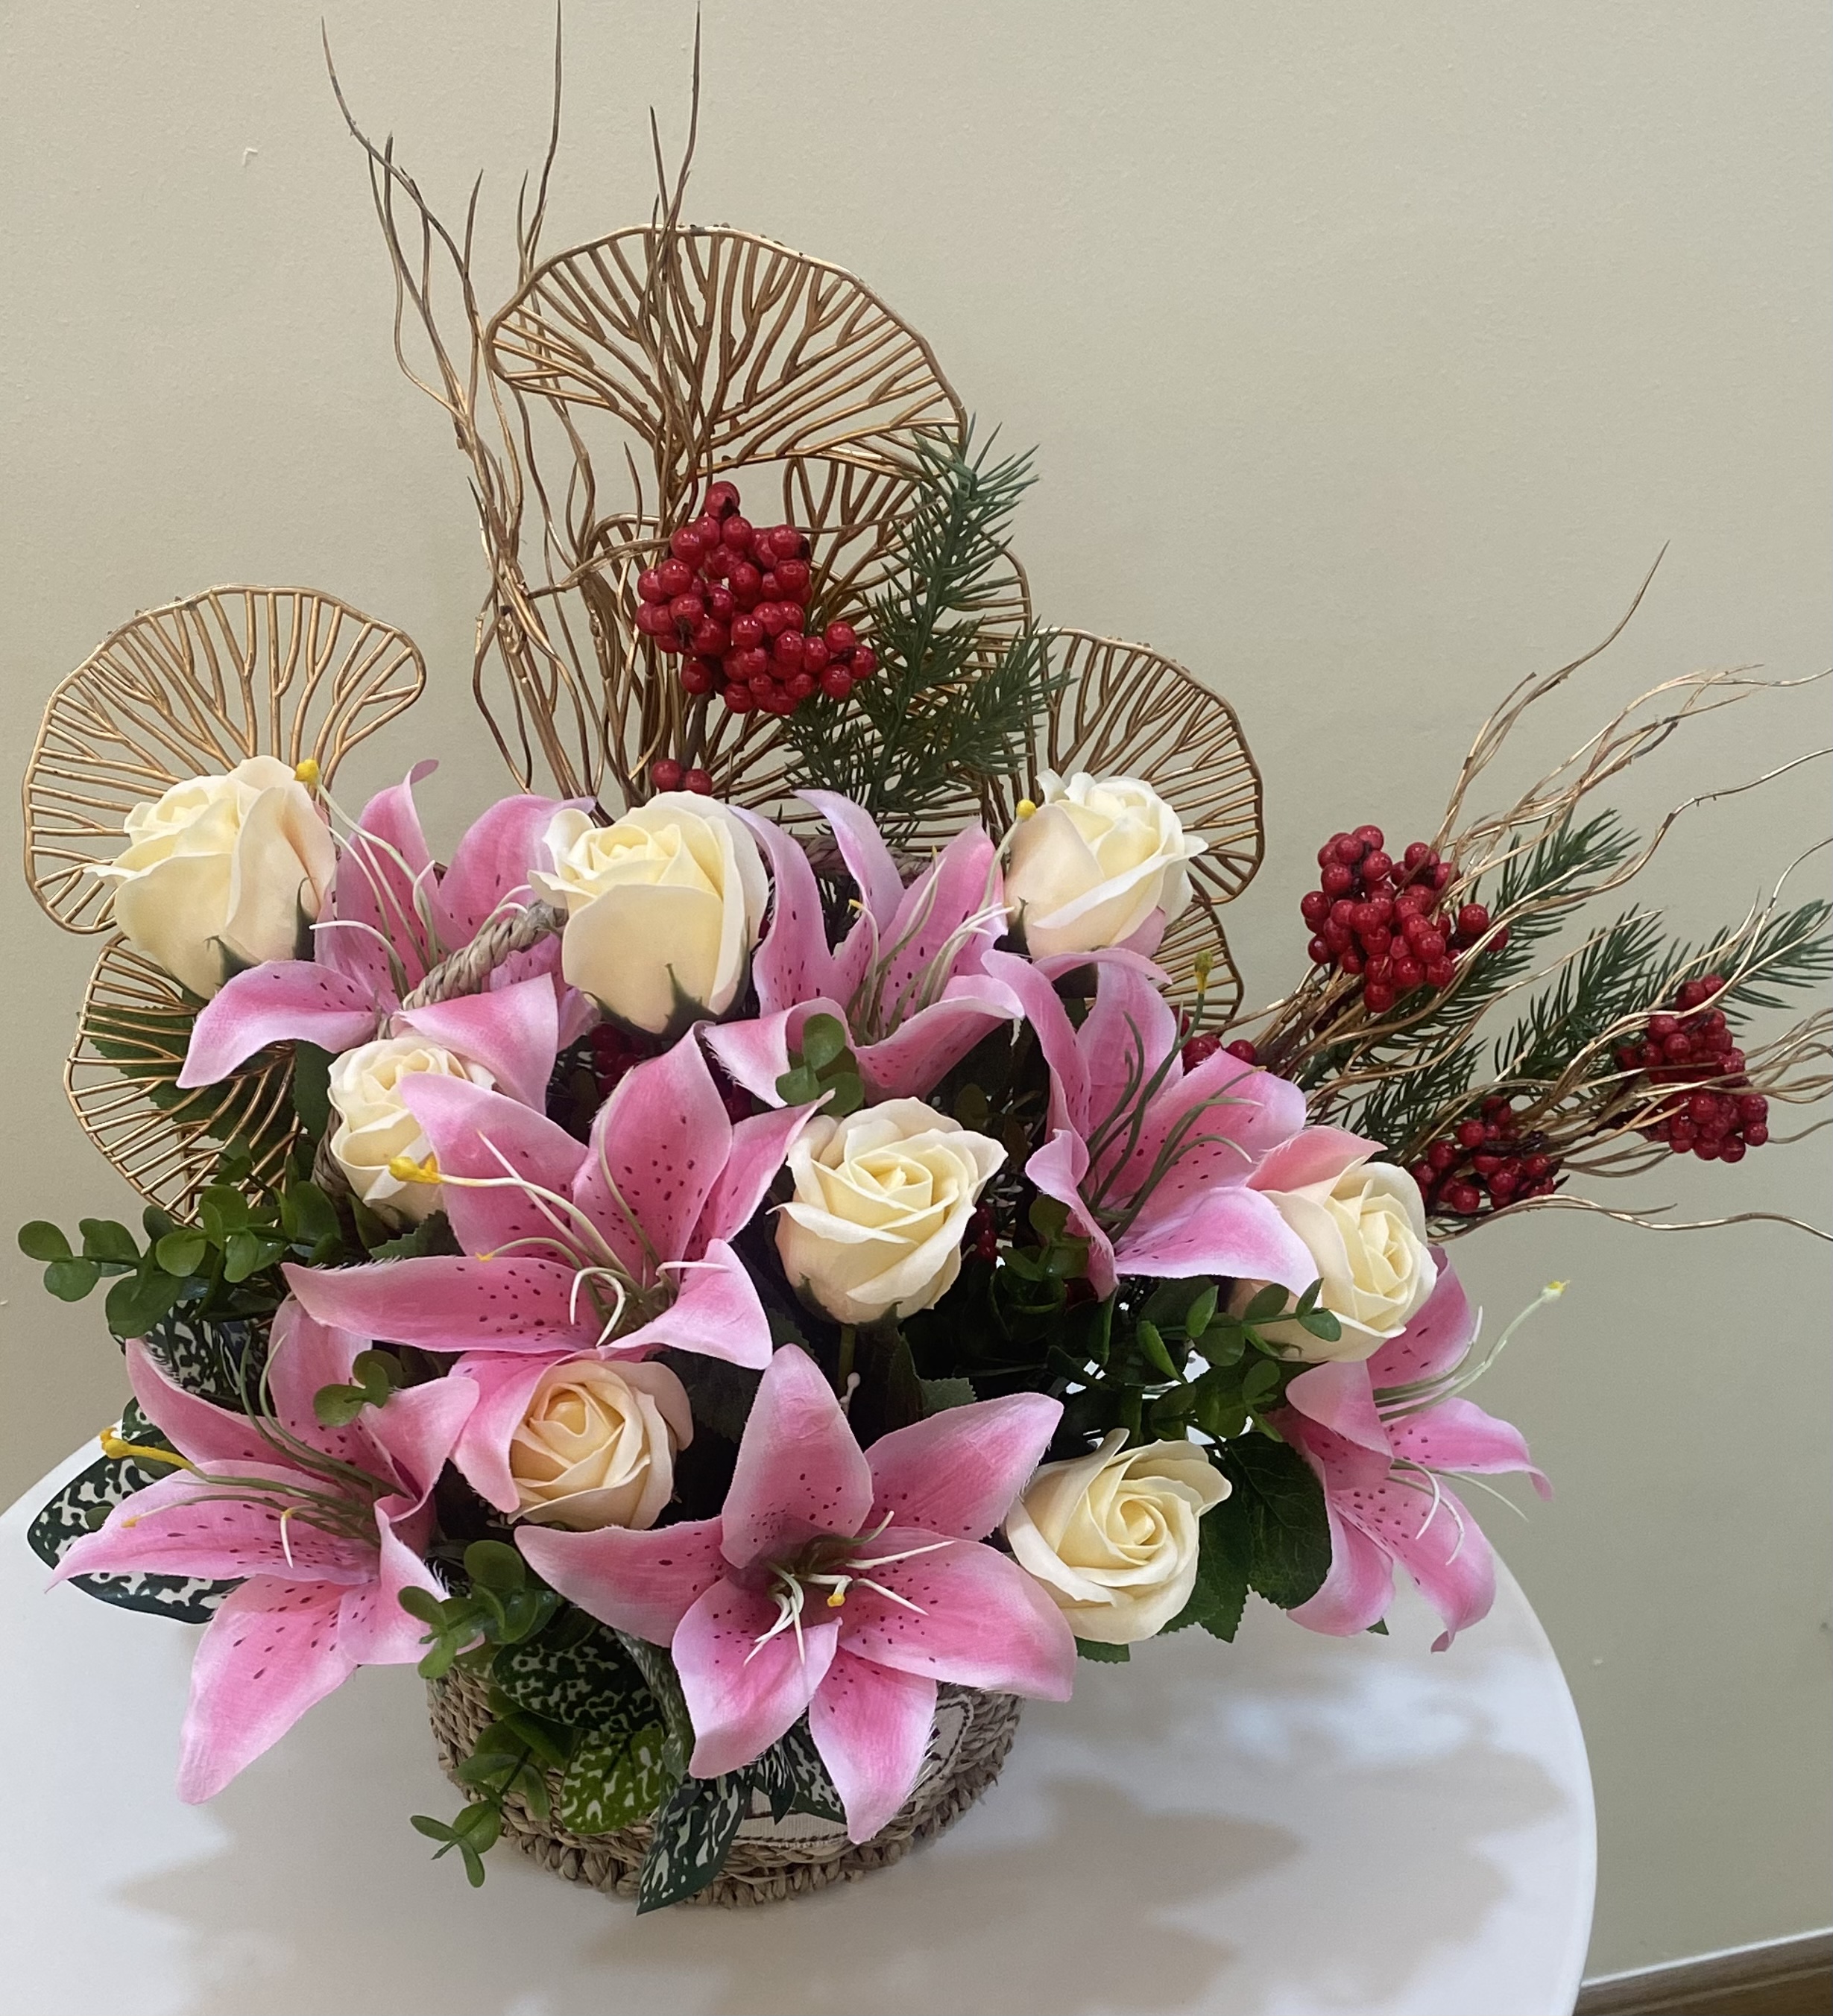 人造花卉装饰系列-01-01 Lovely Florist - Artificial Flower Arrangement Series